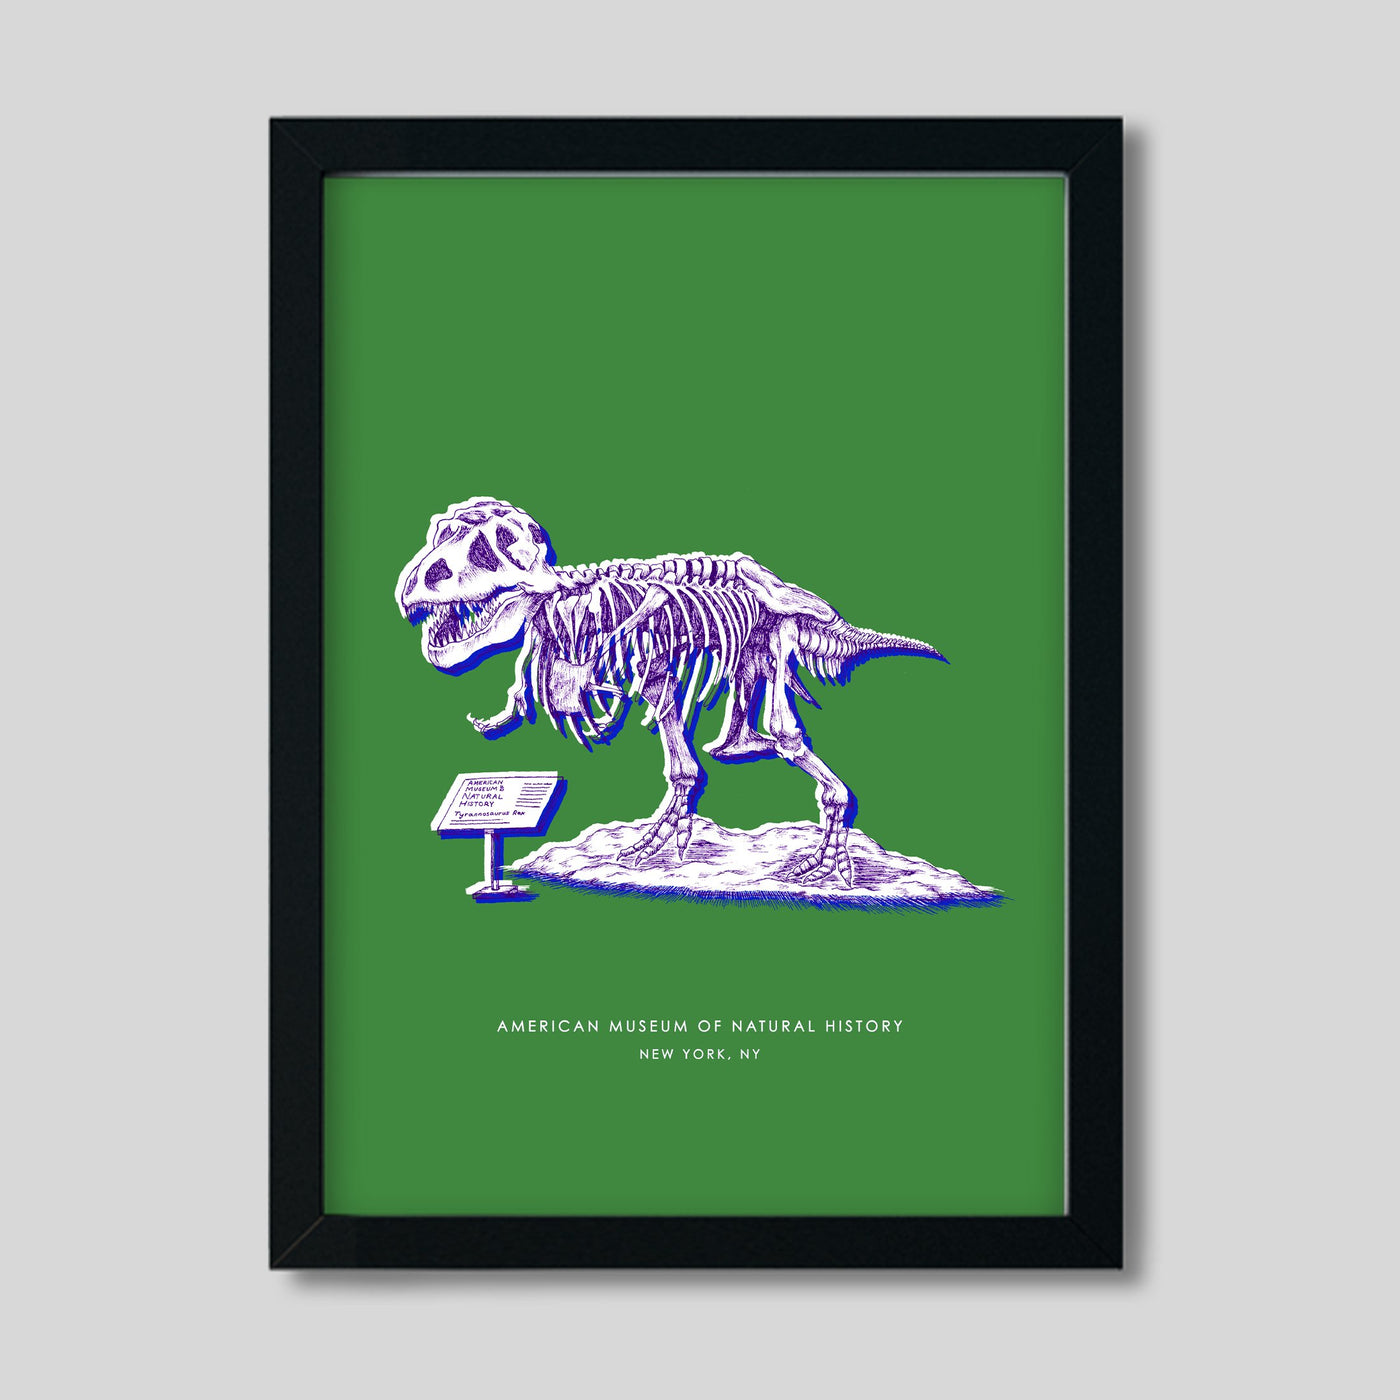 Gallery Prints Green Print / 8x10 / Black Frame New York Dinosaur Print Katie Kime